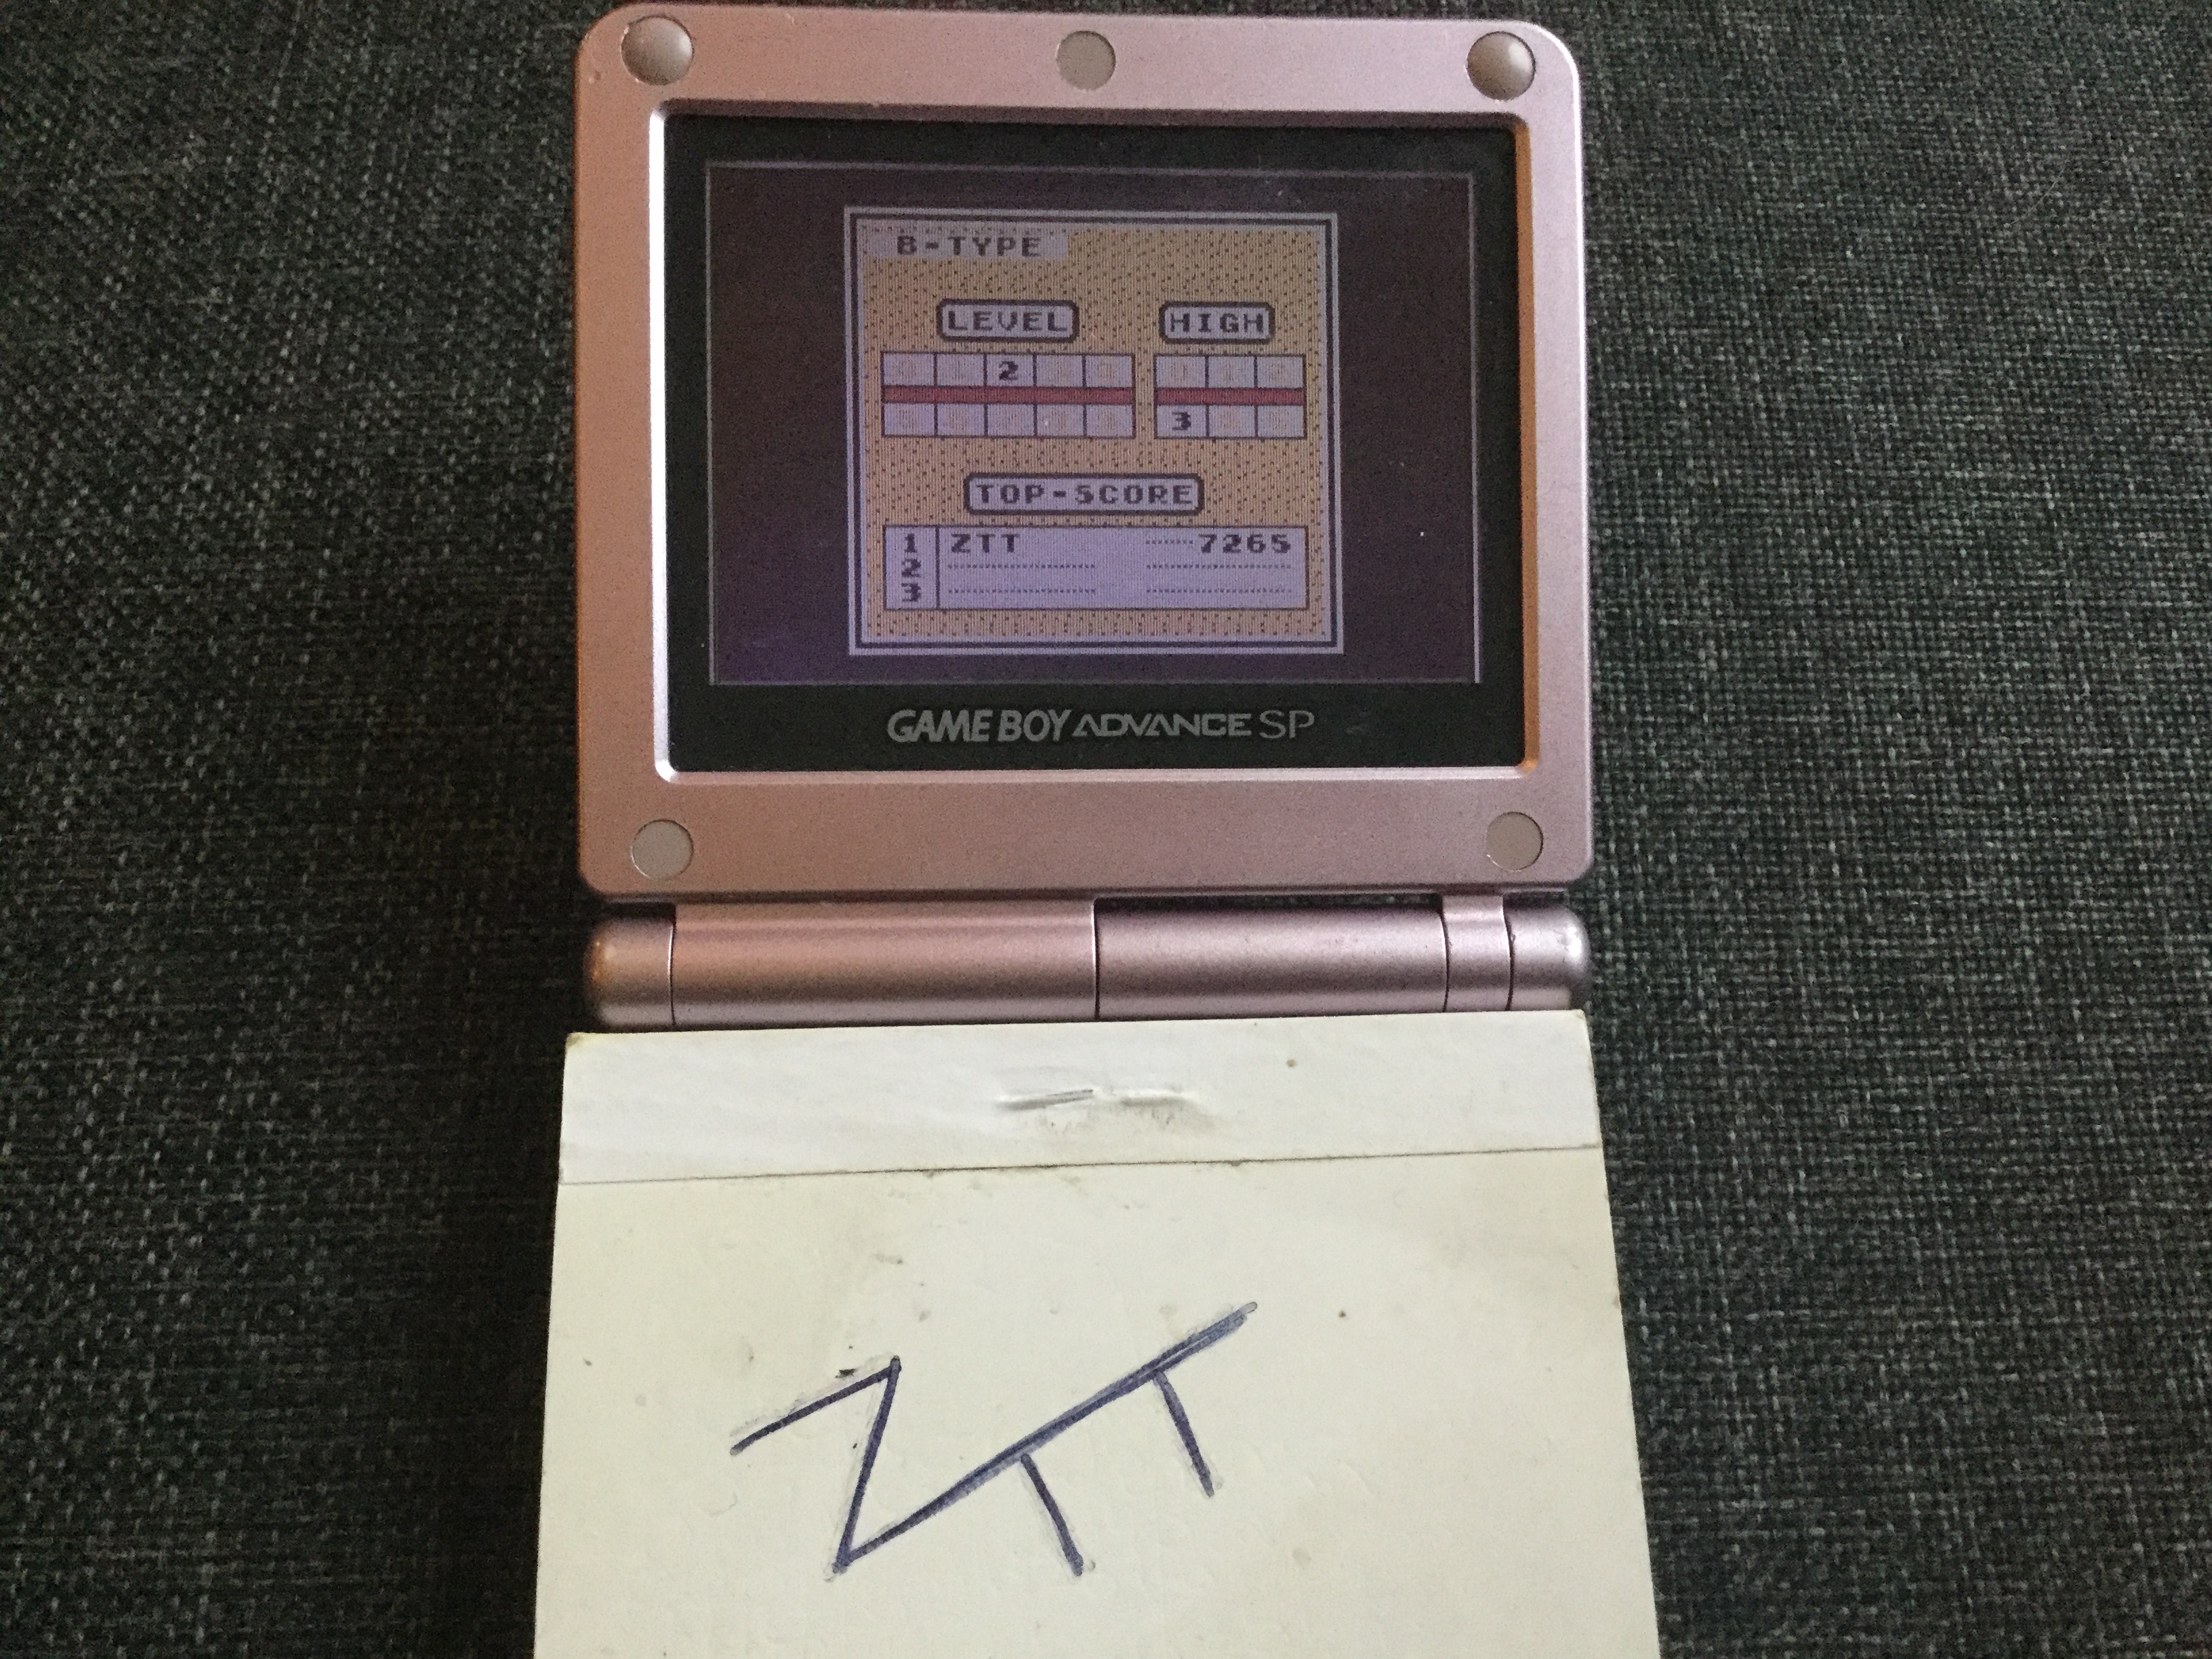 Frankie: Tetris: Type B [Level 2 / High 3] (Game Boy) 7,265 points on 2019-11-18 01:25:16